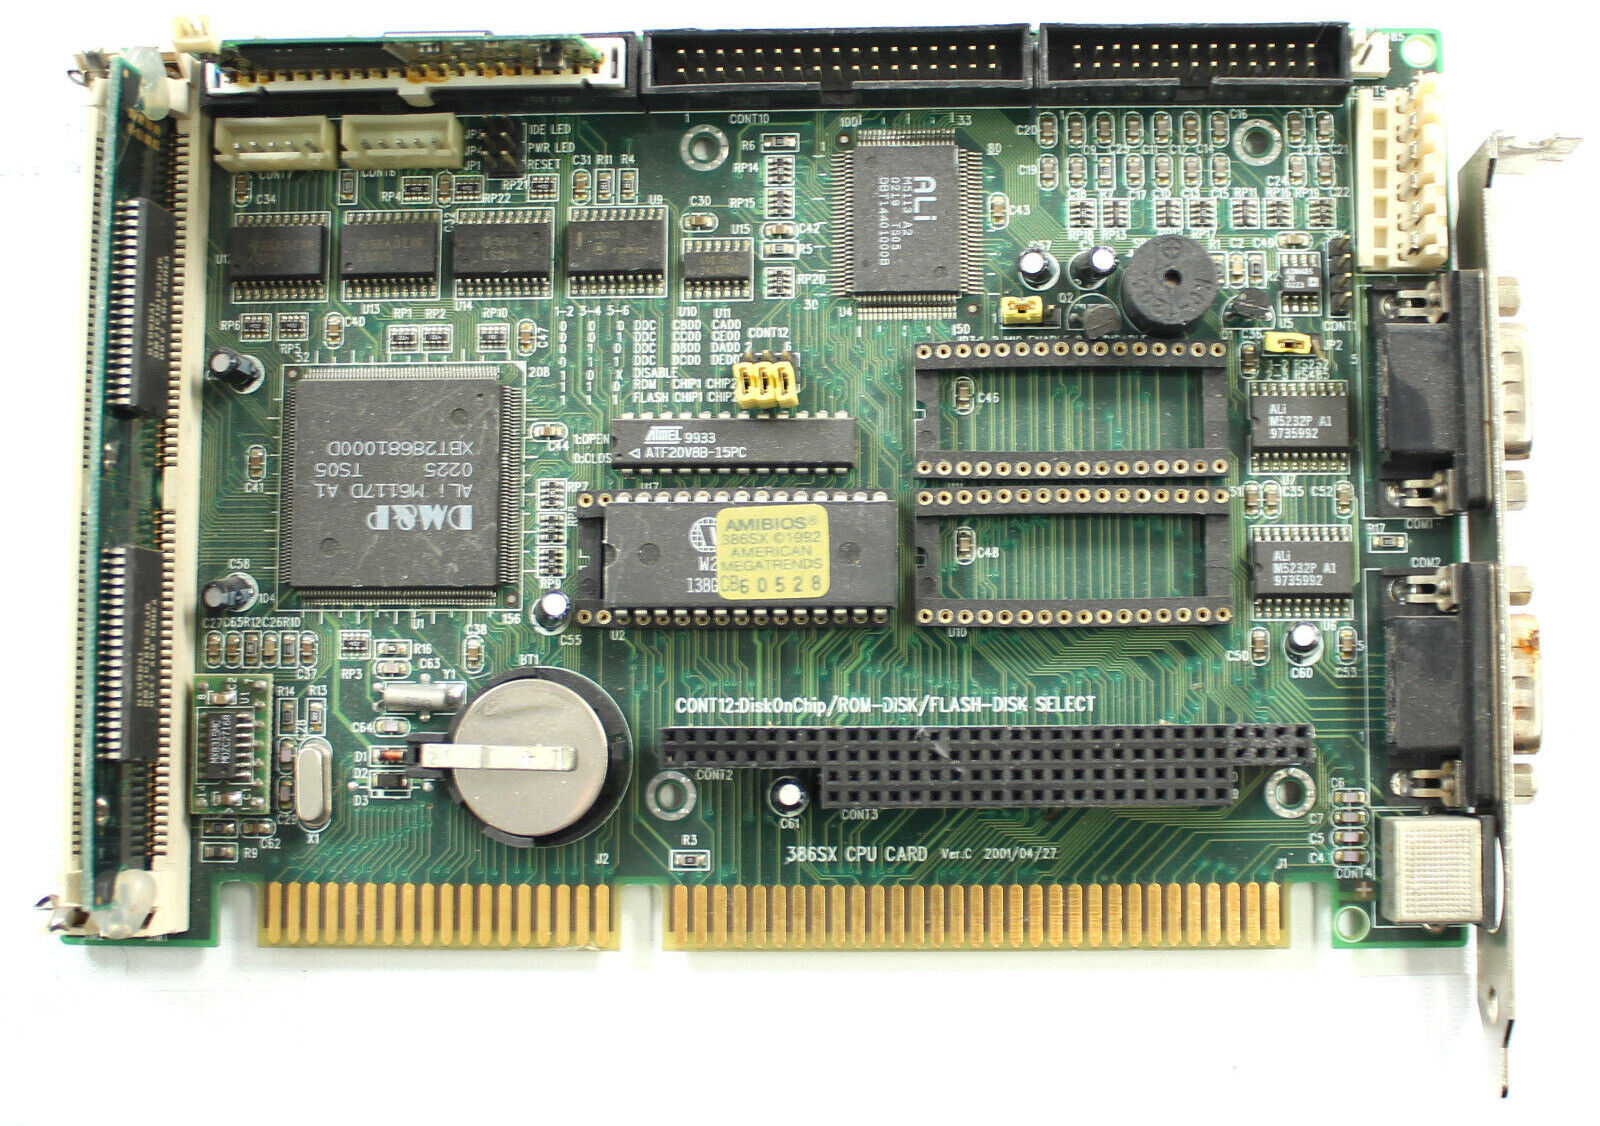 Advantech Industrial computer mainboard 386SX CPU Card w/ DOM Module-see photos